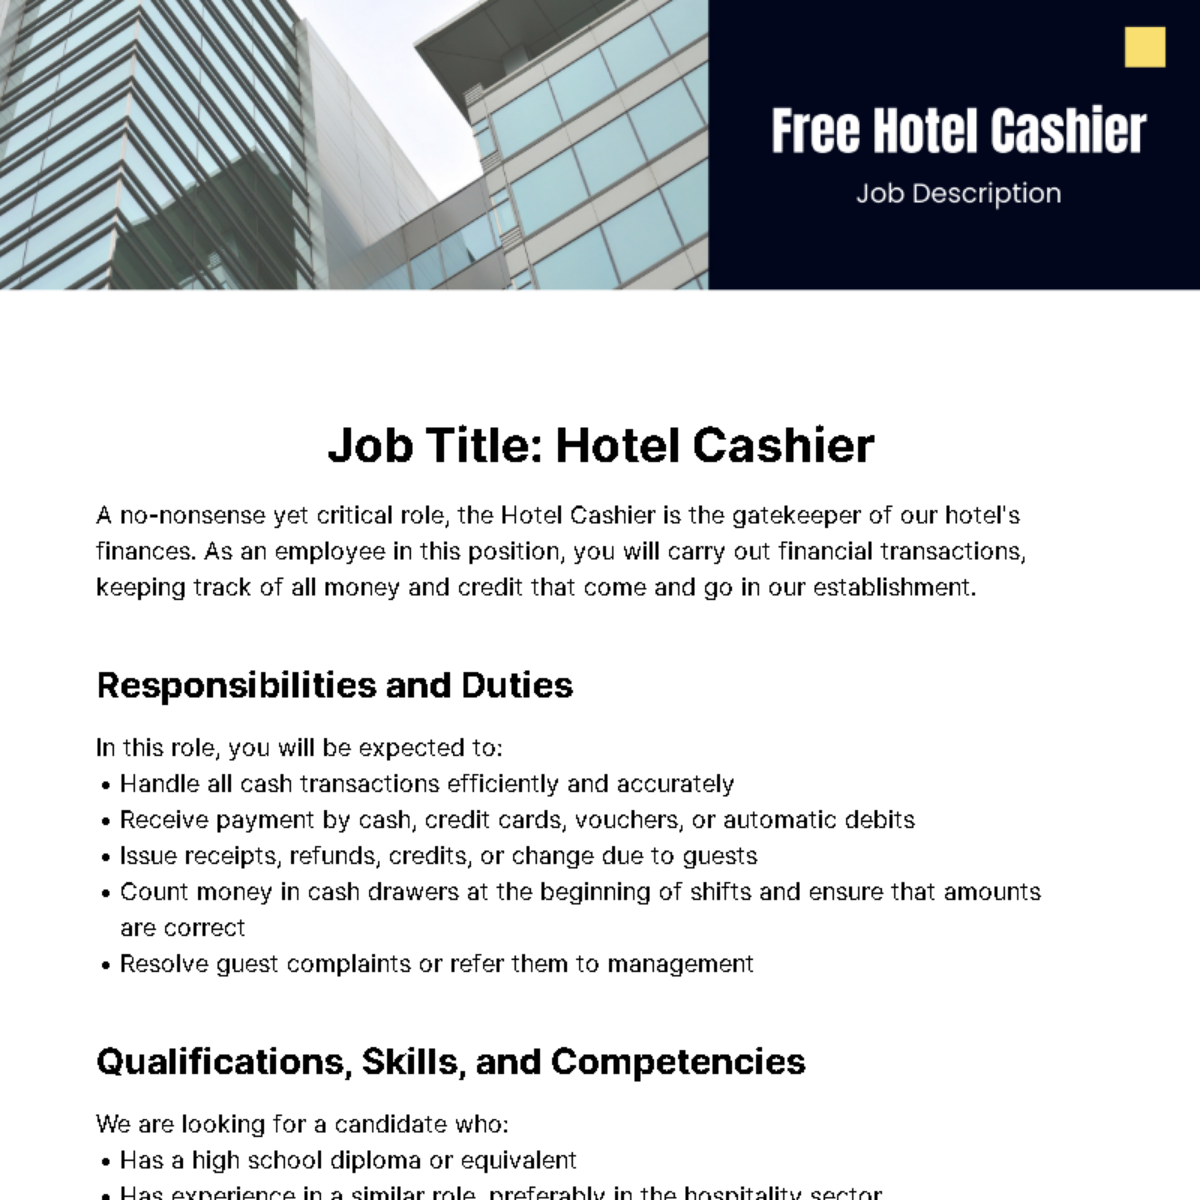 Free Hotel Cashier Job Description Template